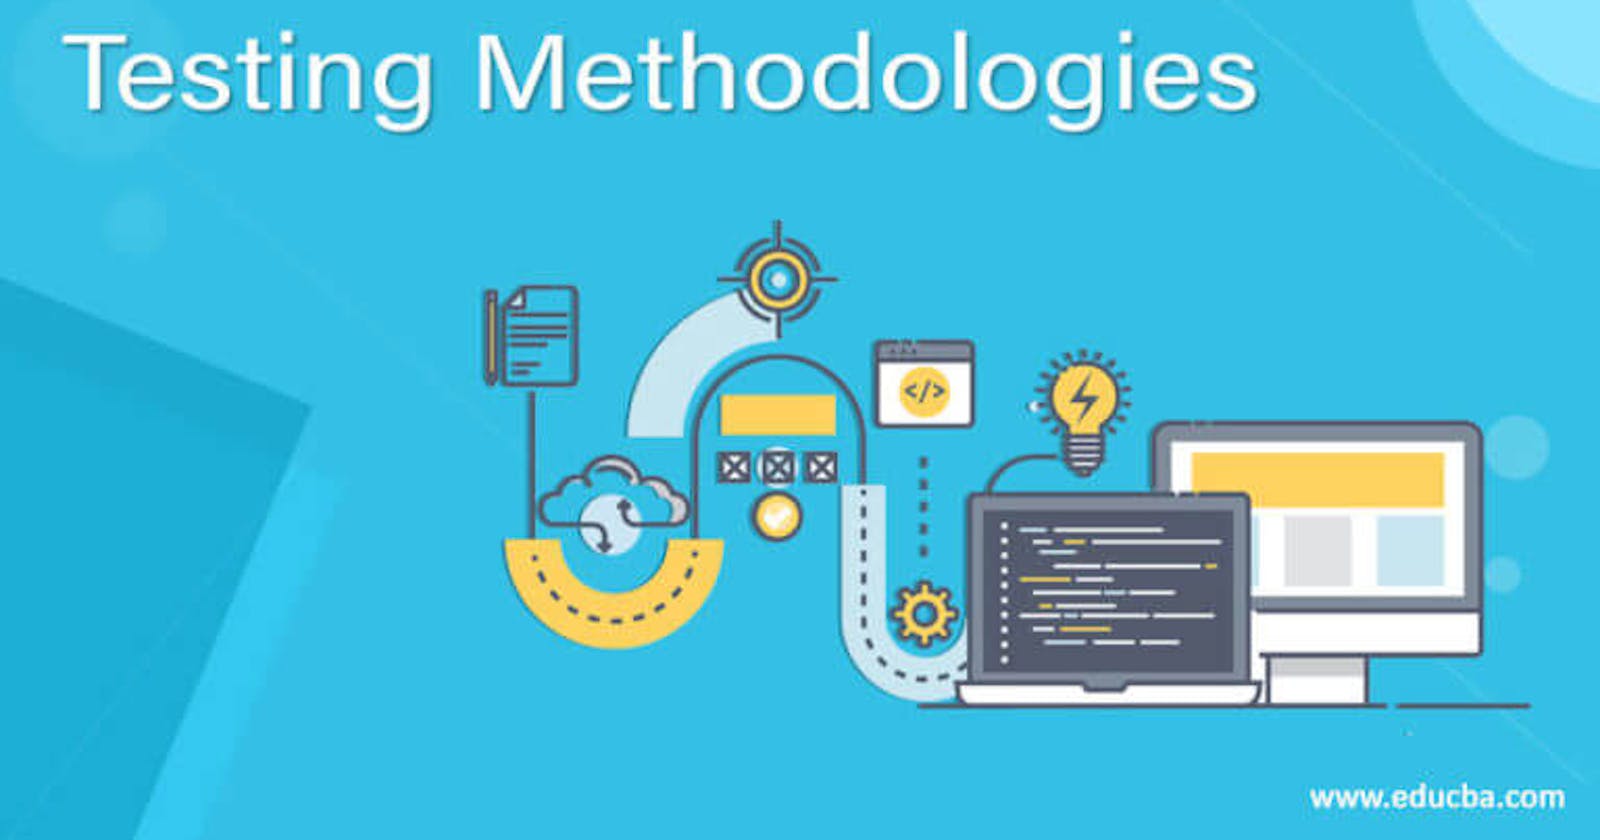 Testing Methodologies & SDLC